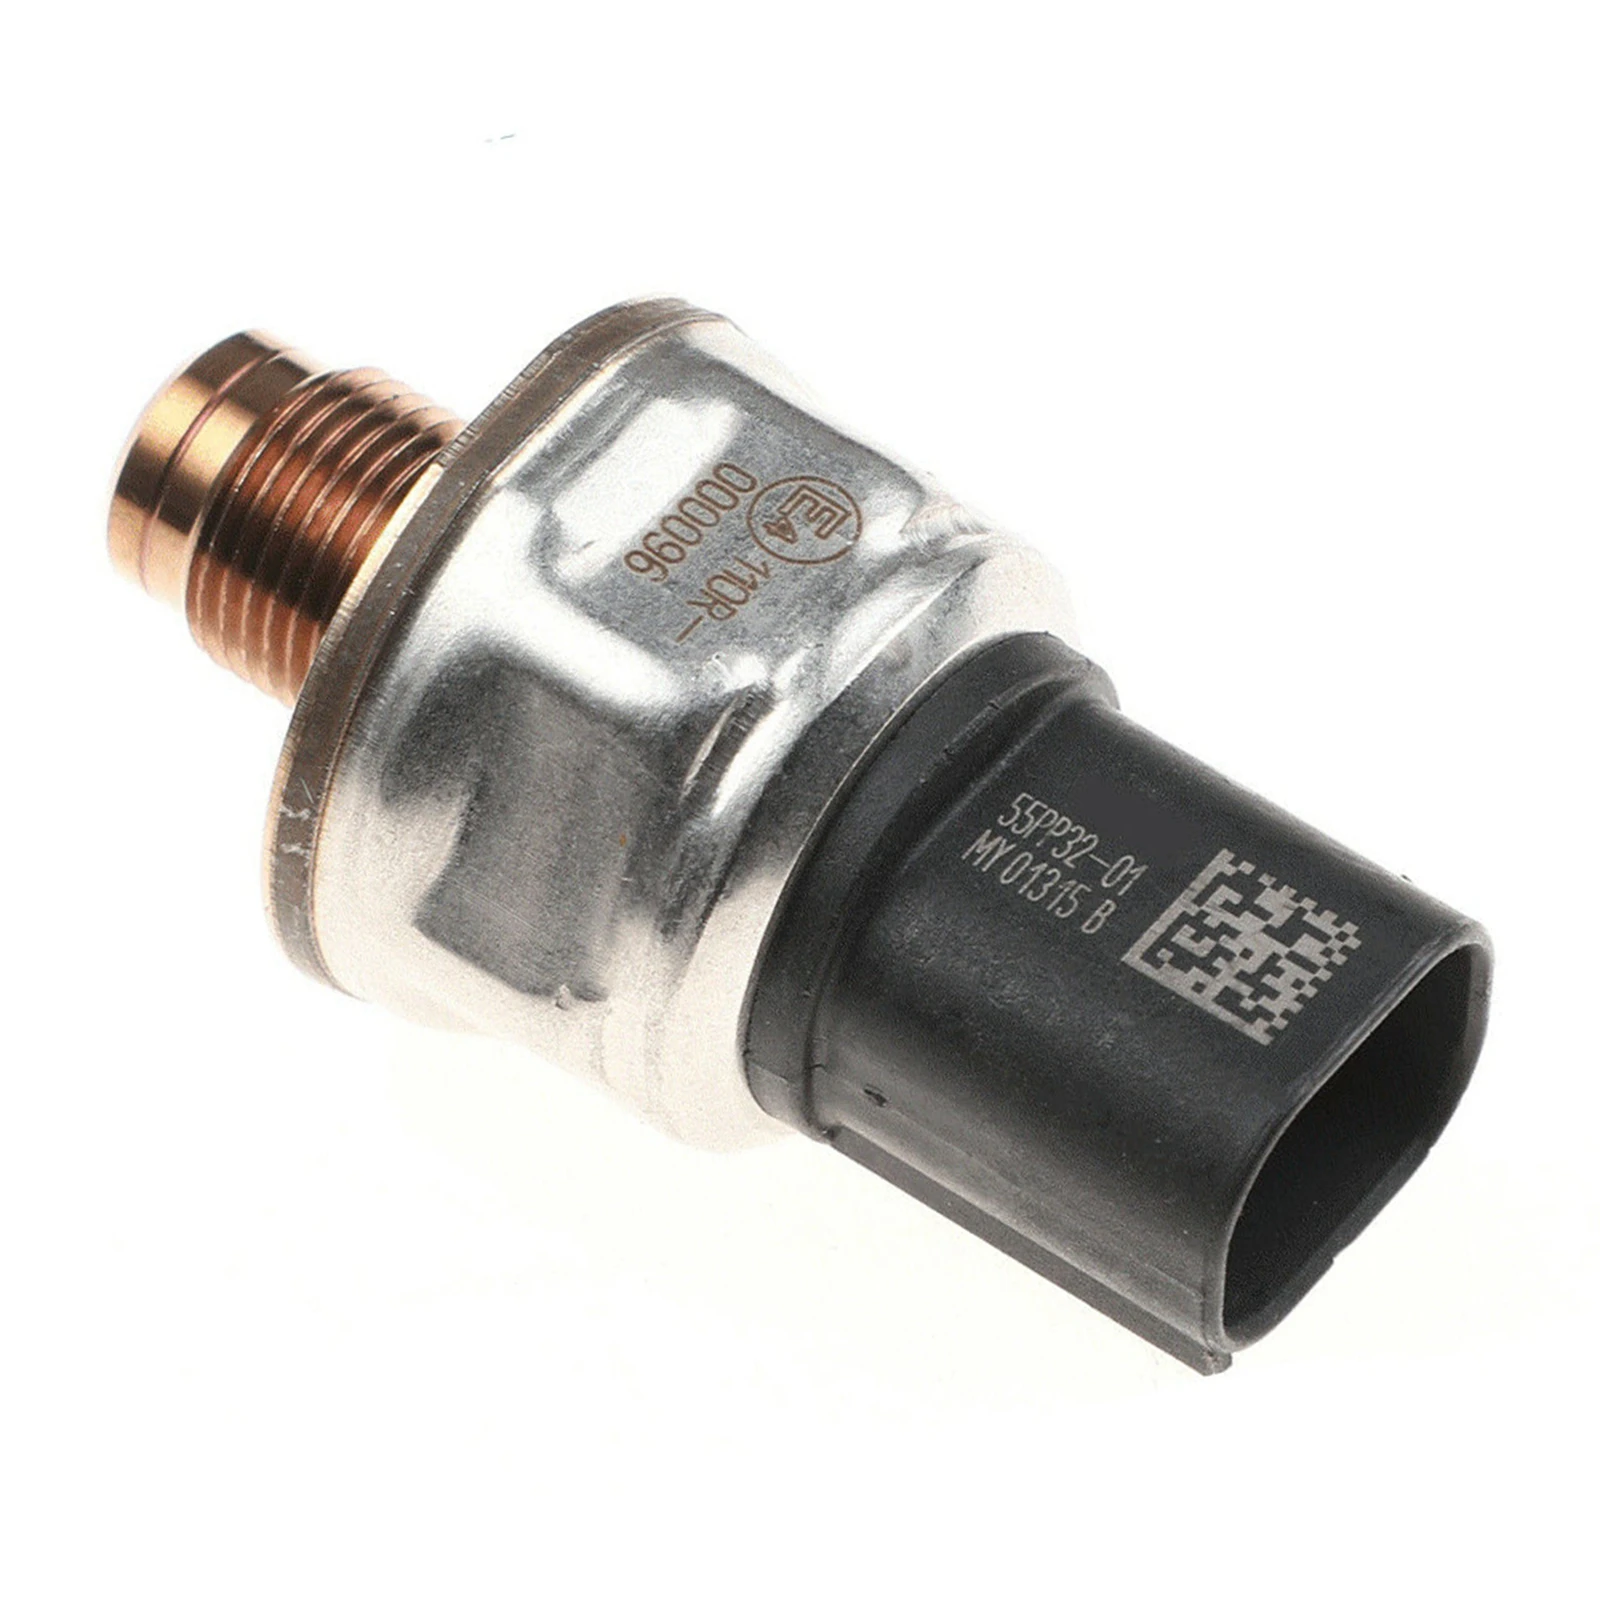 Fuel Rail Pressure Sensor 55PP32-01 Replacement Parts Automotive Fuel System Accessories Fit for Cng Pressure Regulator